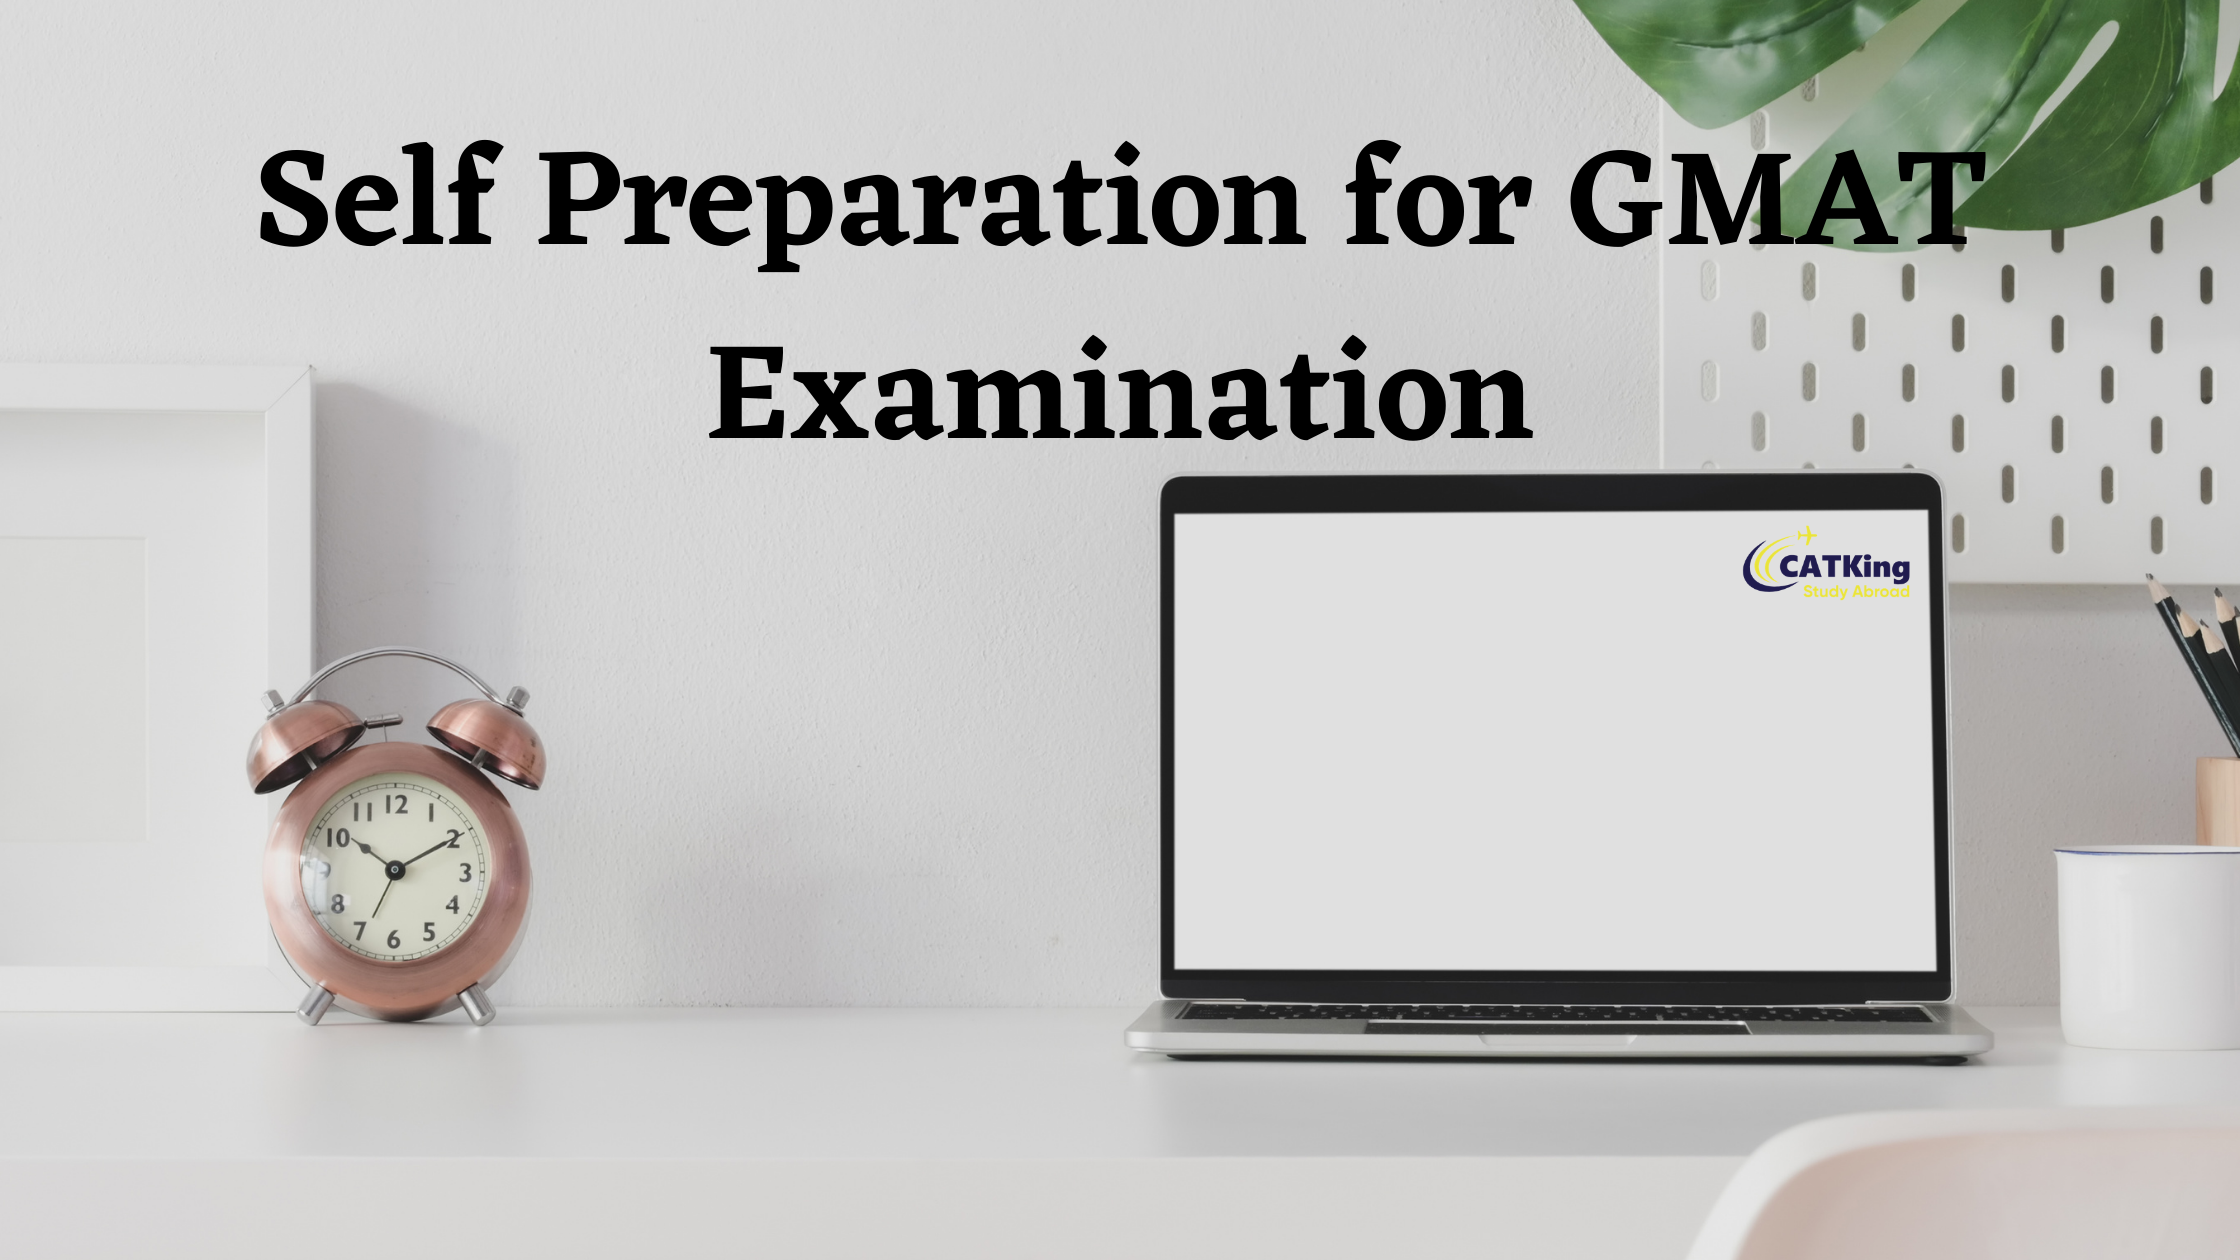 Self Preparation for GMAT Examination